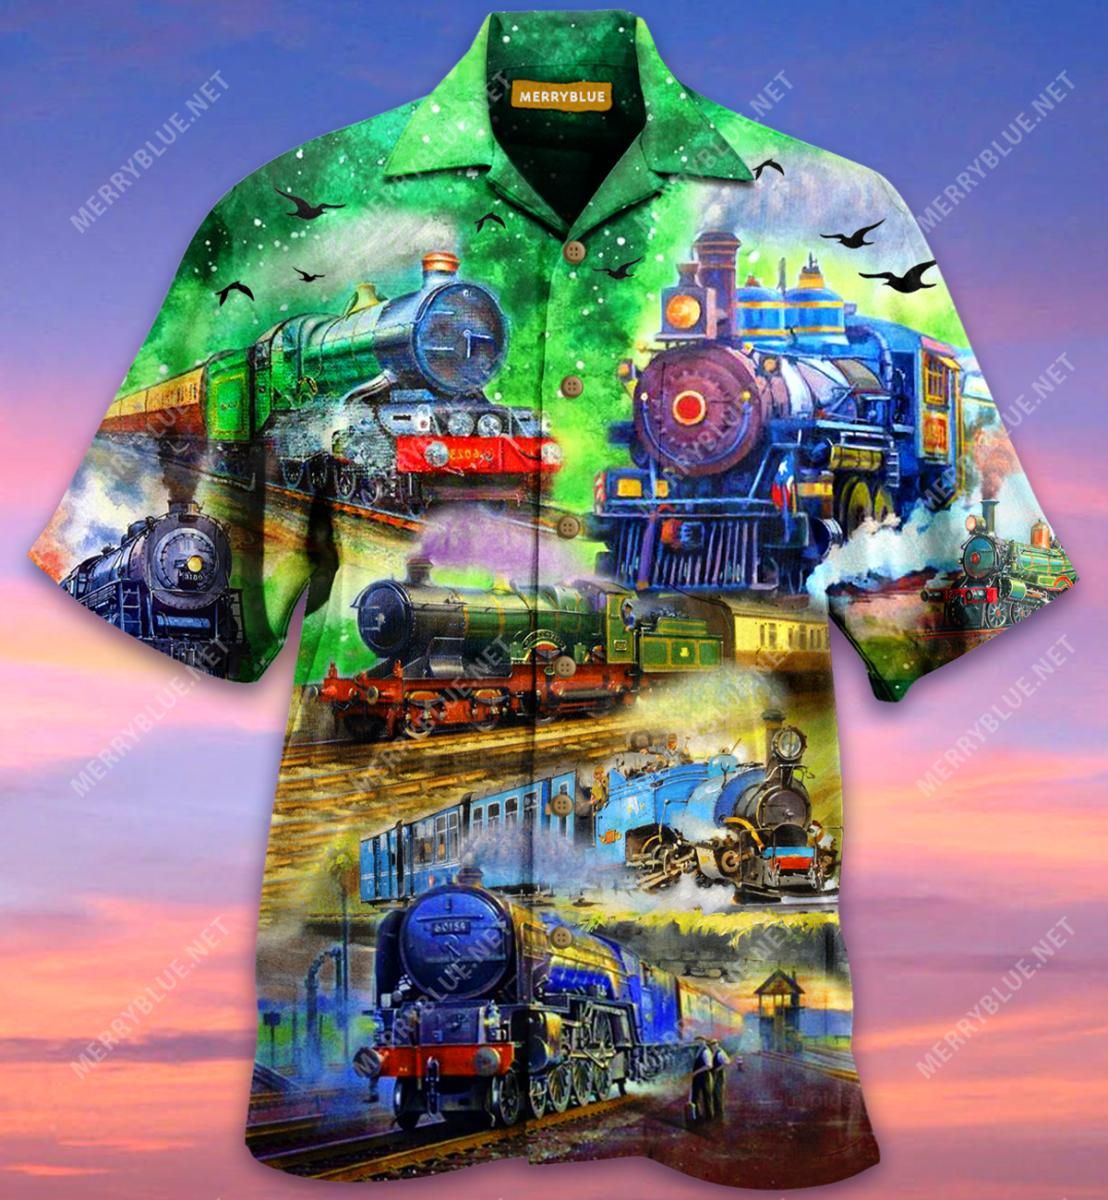 Train Life Is A Journey Enjoy The Ride Aloha Hawaiian Shirt Colorful Short Sleeve Summer Beach Casual Shirt For Men And Women